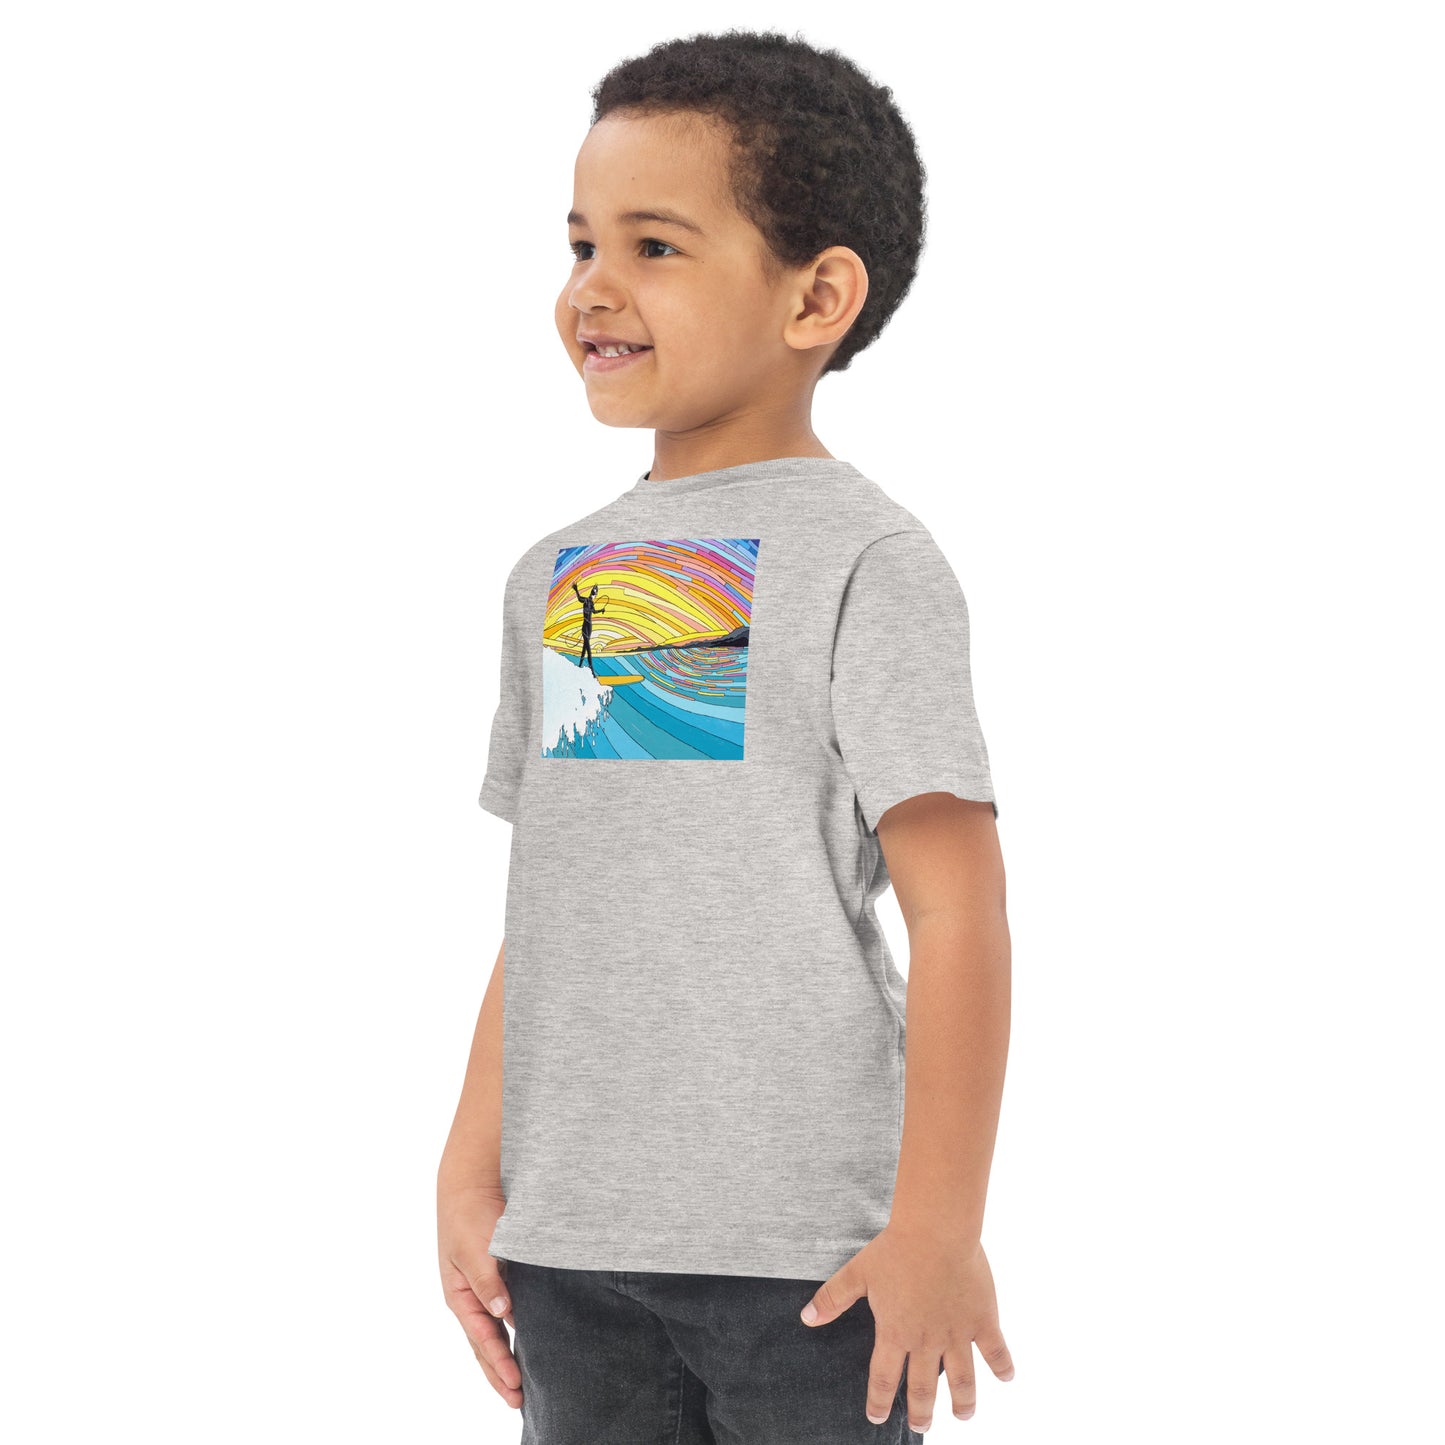 Meowie Wowie Toddler jersey t-shirt